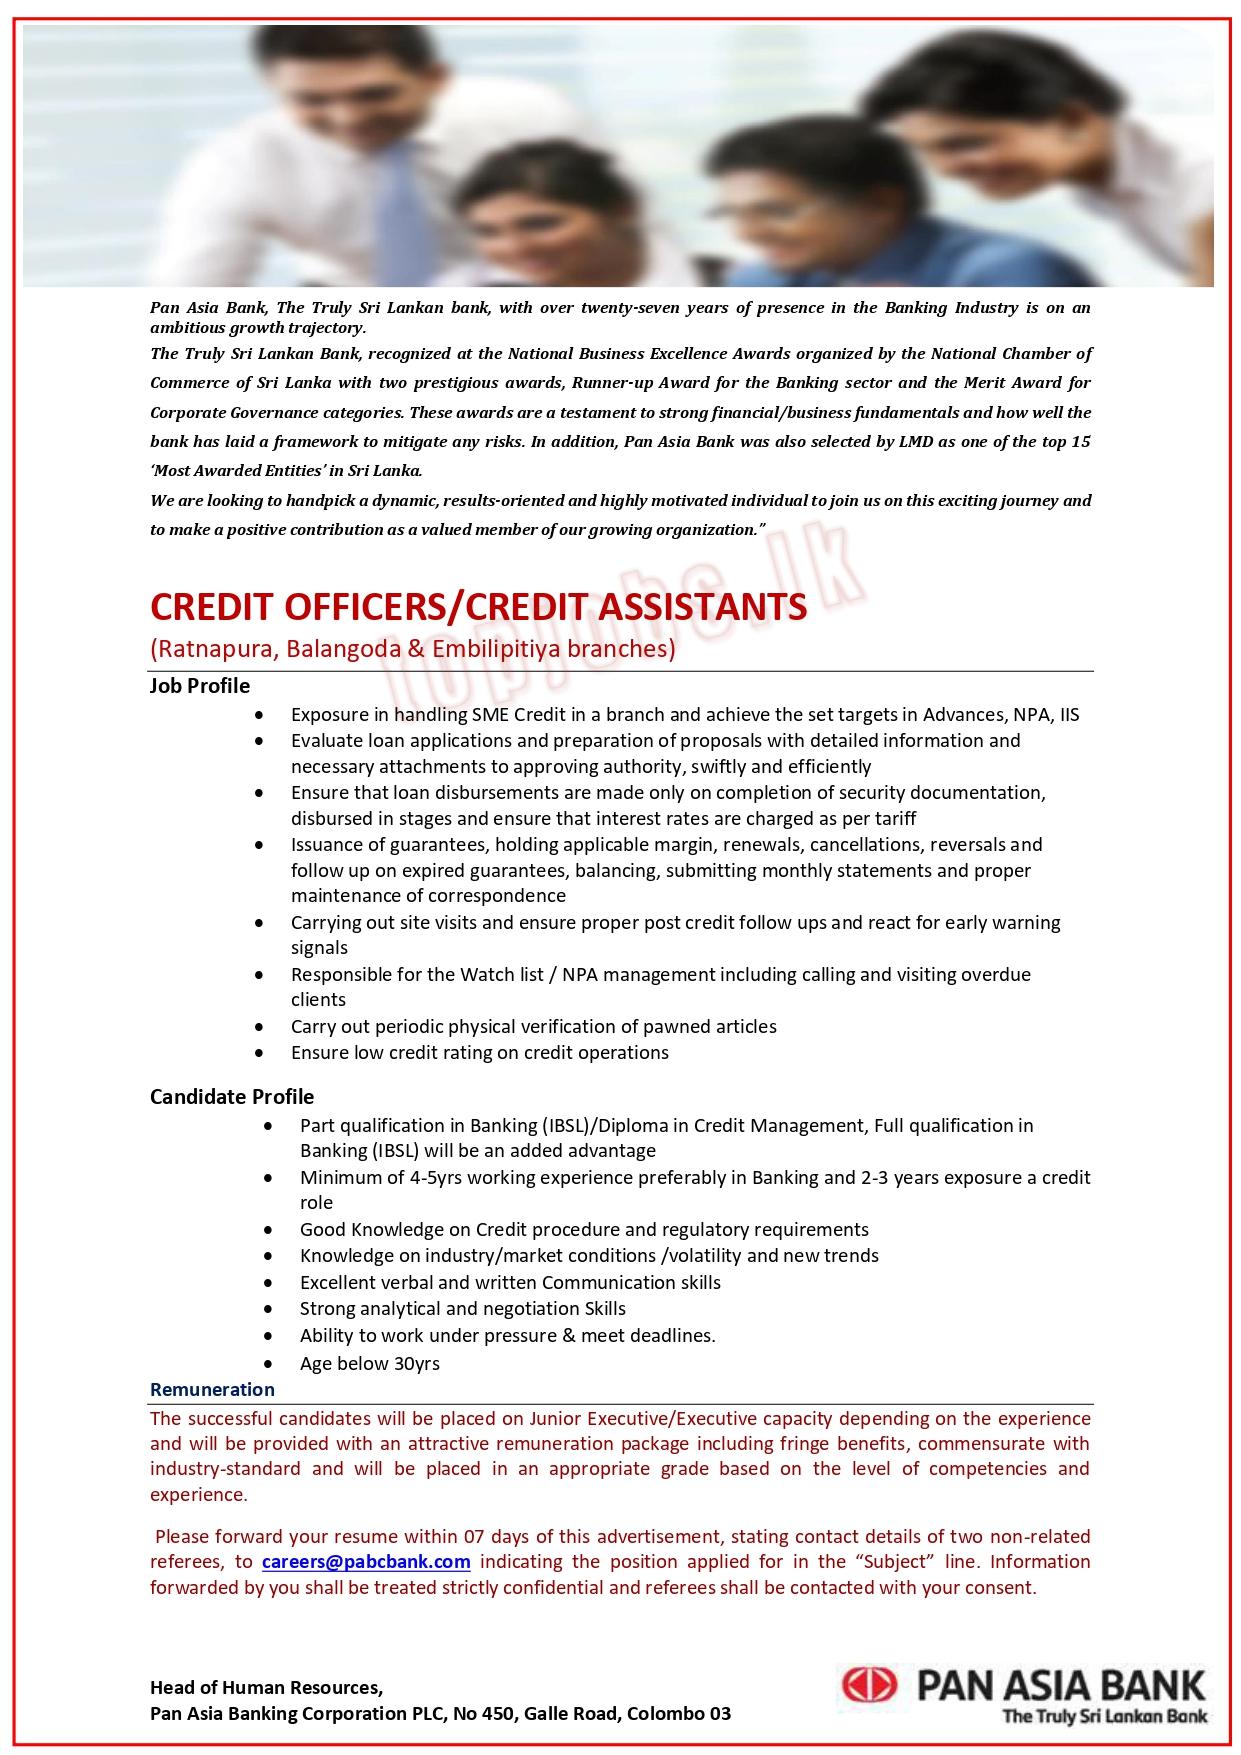 Credit Officers / Credit Assistant Vacancy at Ratnapura Pan Asia Bank Jobs Vacancies